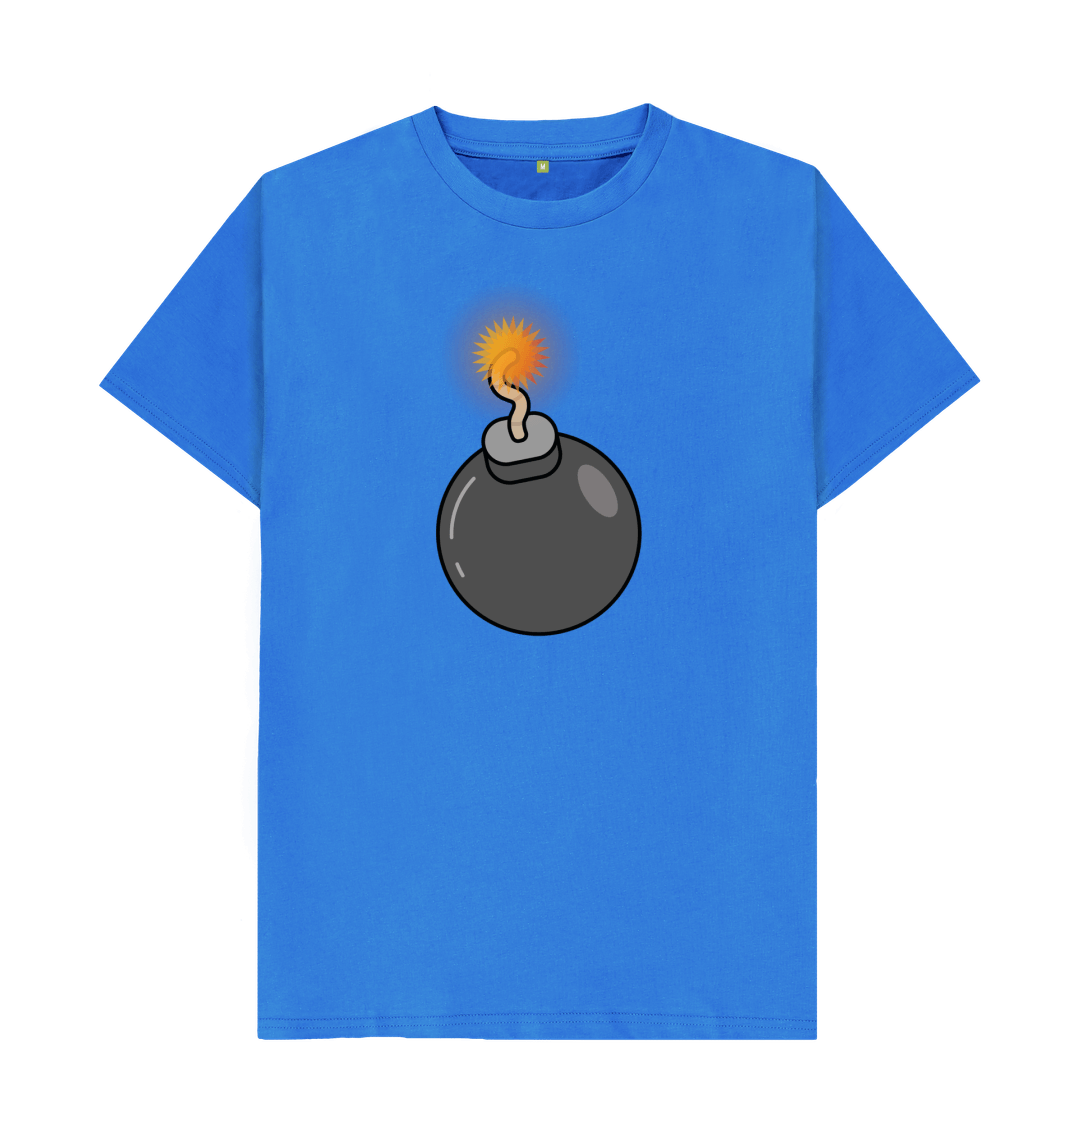 Bright Blue Men's Cartoon Ticking Timebomb Organic Cotton Mental Health T-Shirt